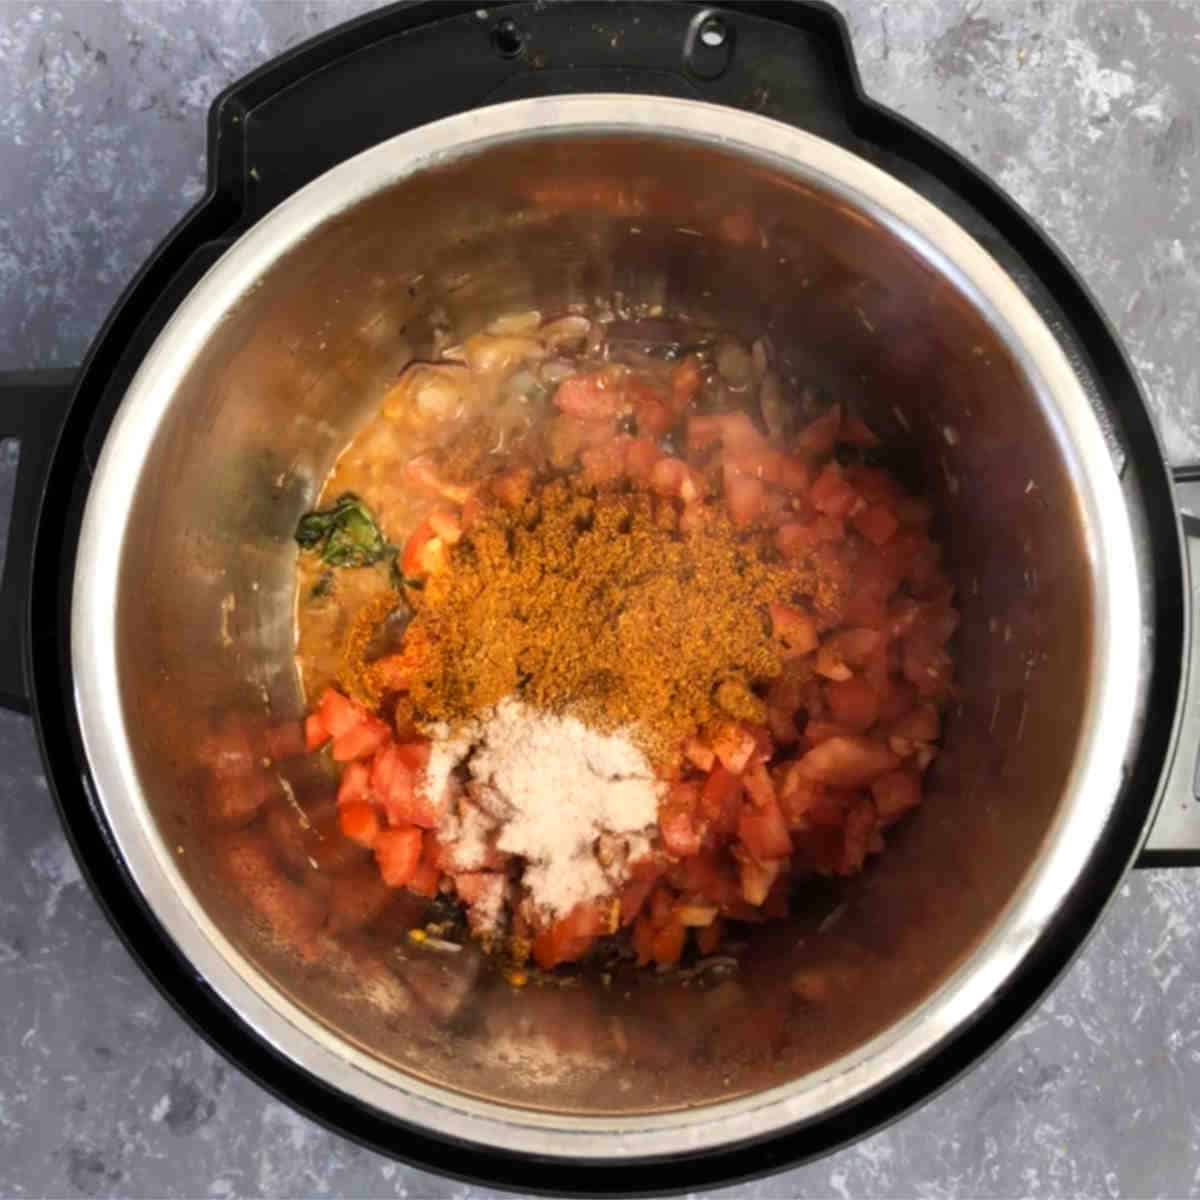 Add the tomatoes, masala powder, and salt.